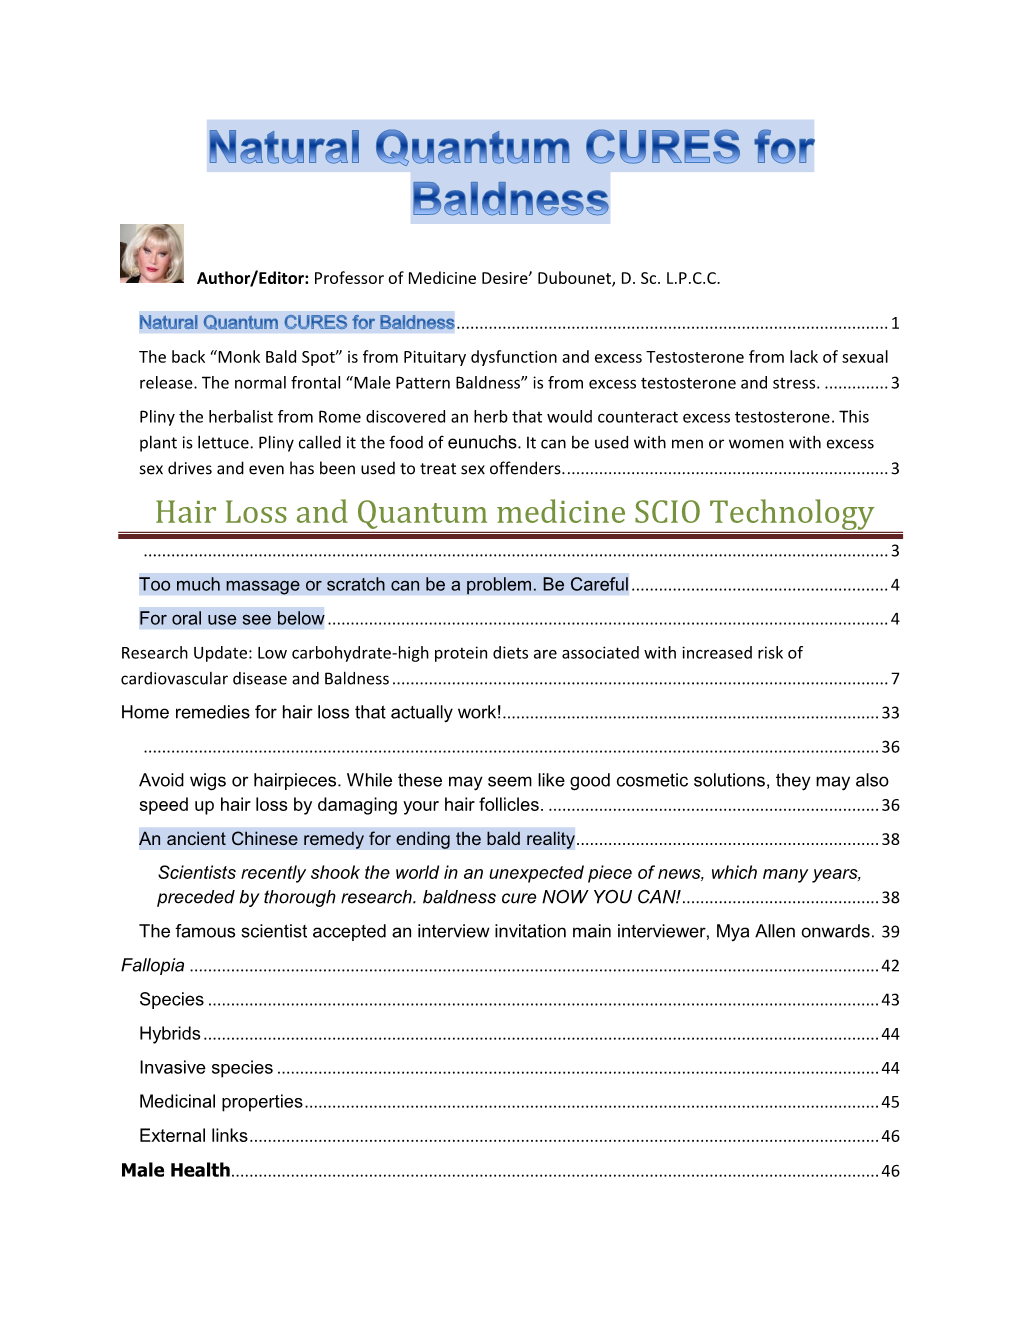 Hair Loss and Quantum Medicine SCIO Technology